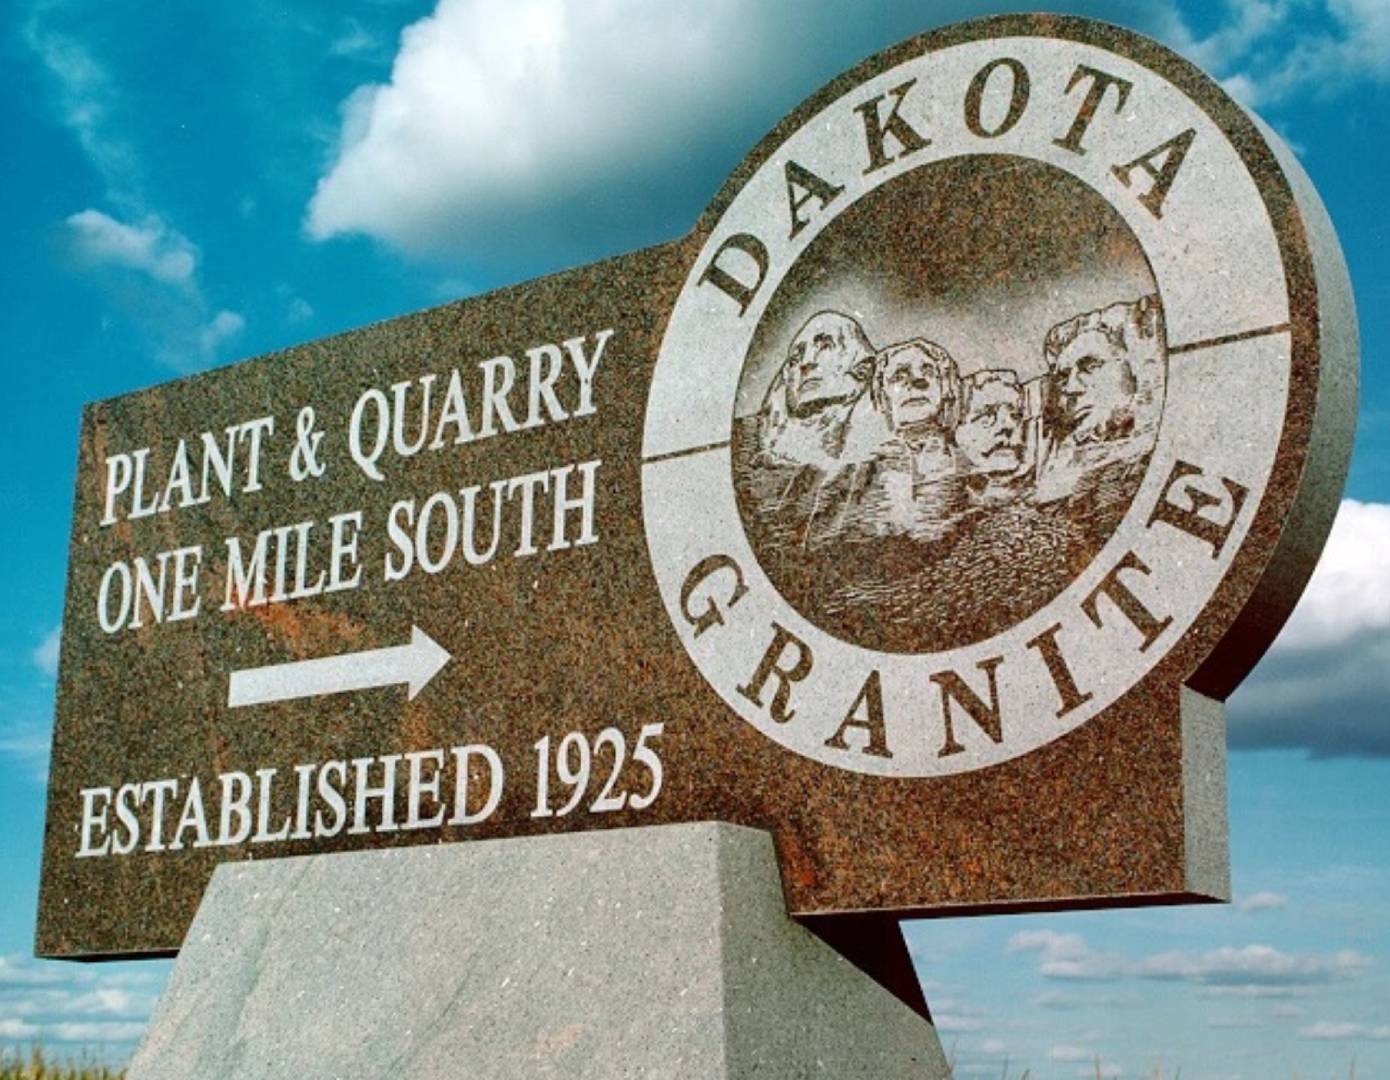 A sign for the dakota granite plant and quarry.